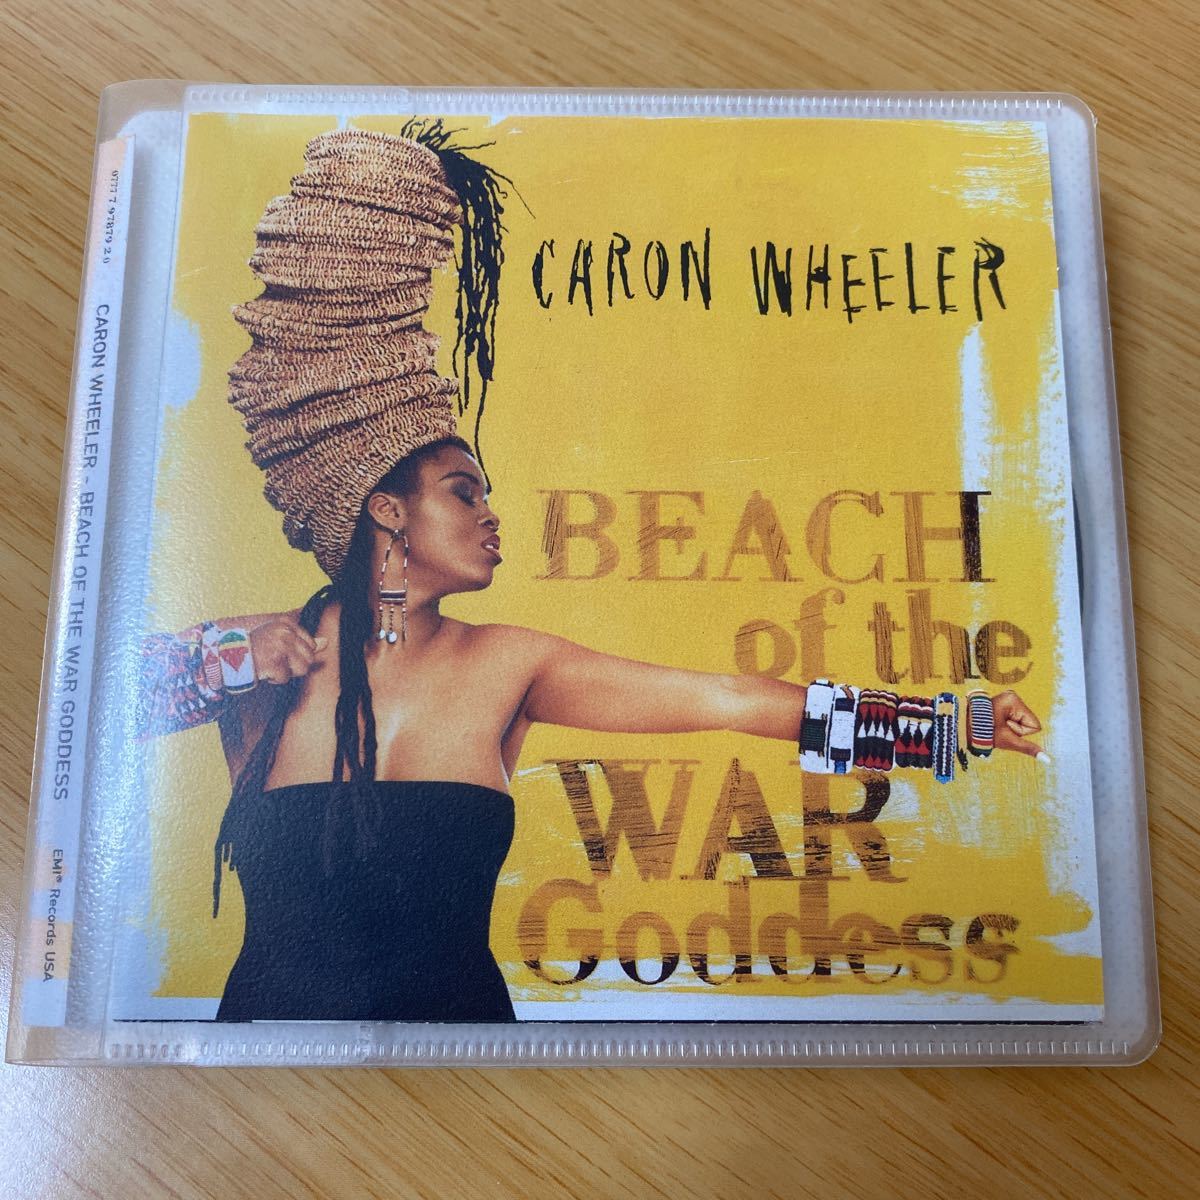 【美品】CD Caron Wheeler / Beach Of The War Goddess_画像1